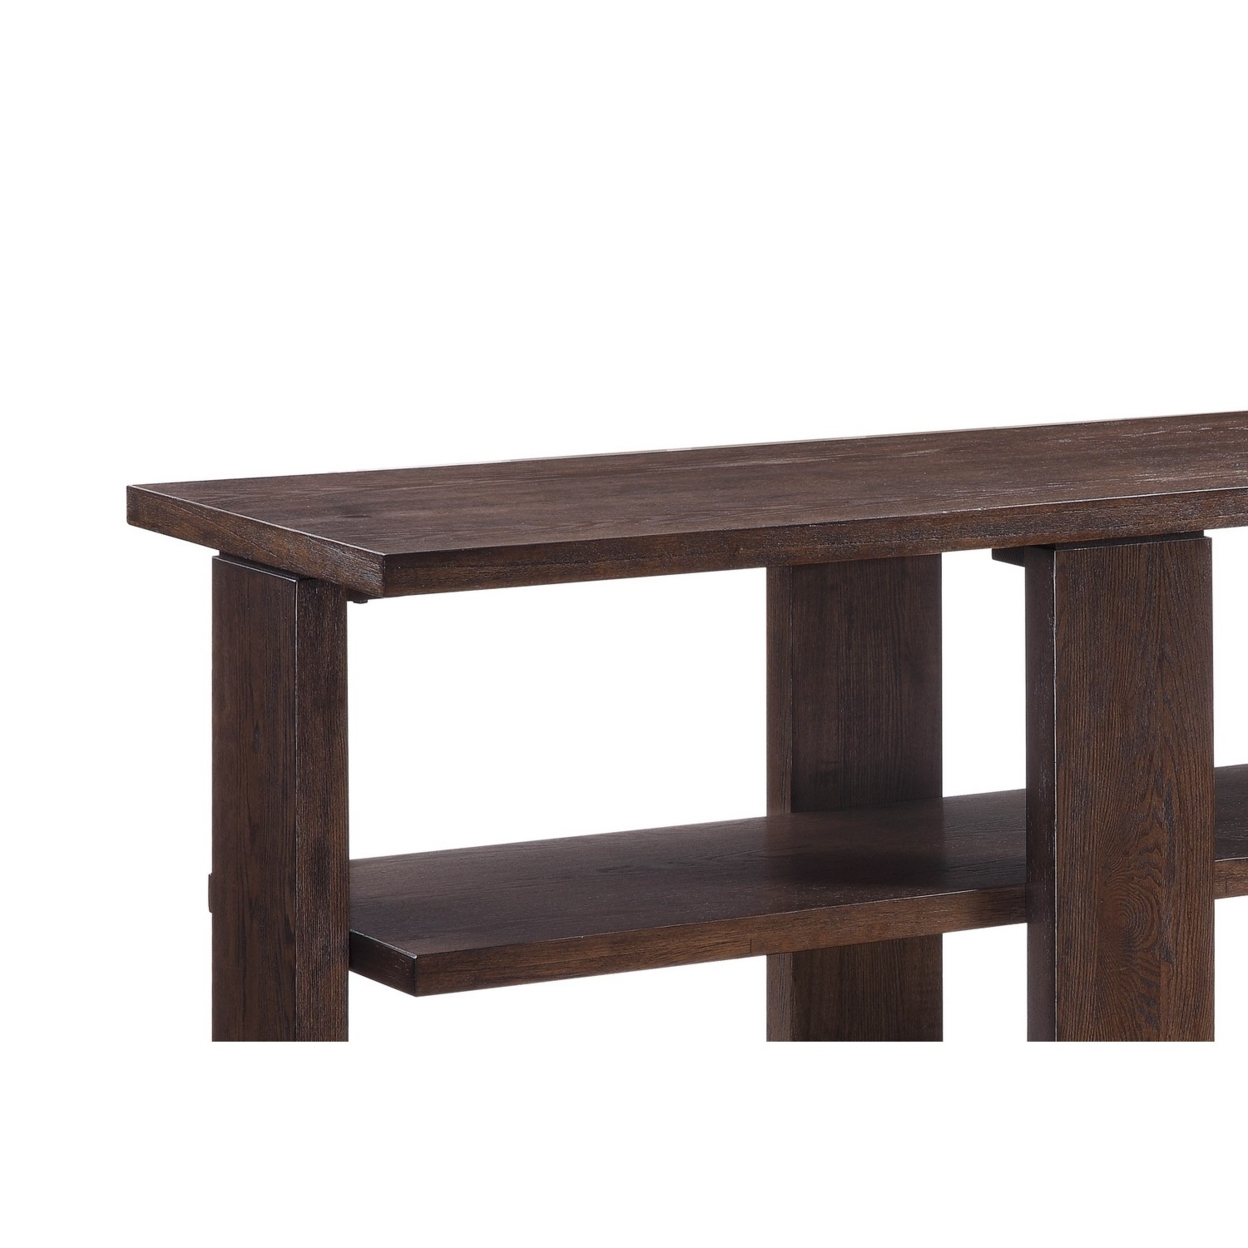 Wooden Sofa Table With 2 Open Display Shelves, Brown- Saltoro Sherpi